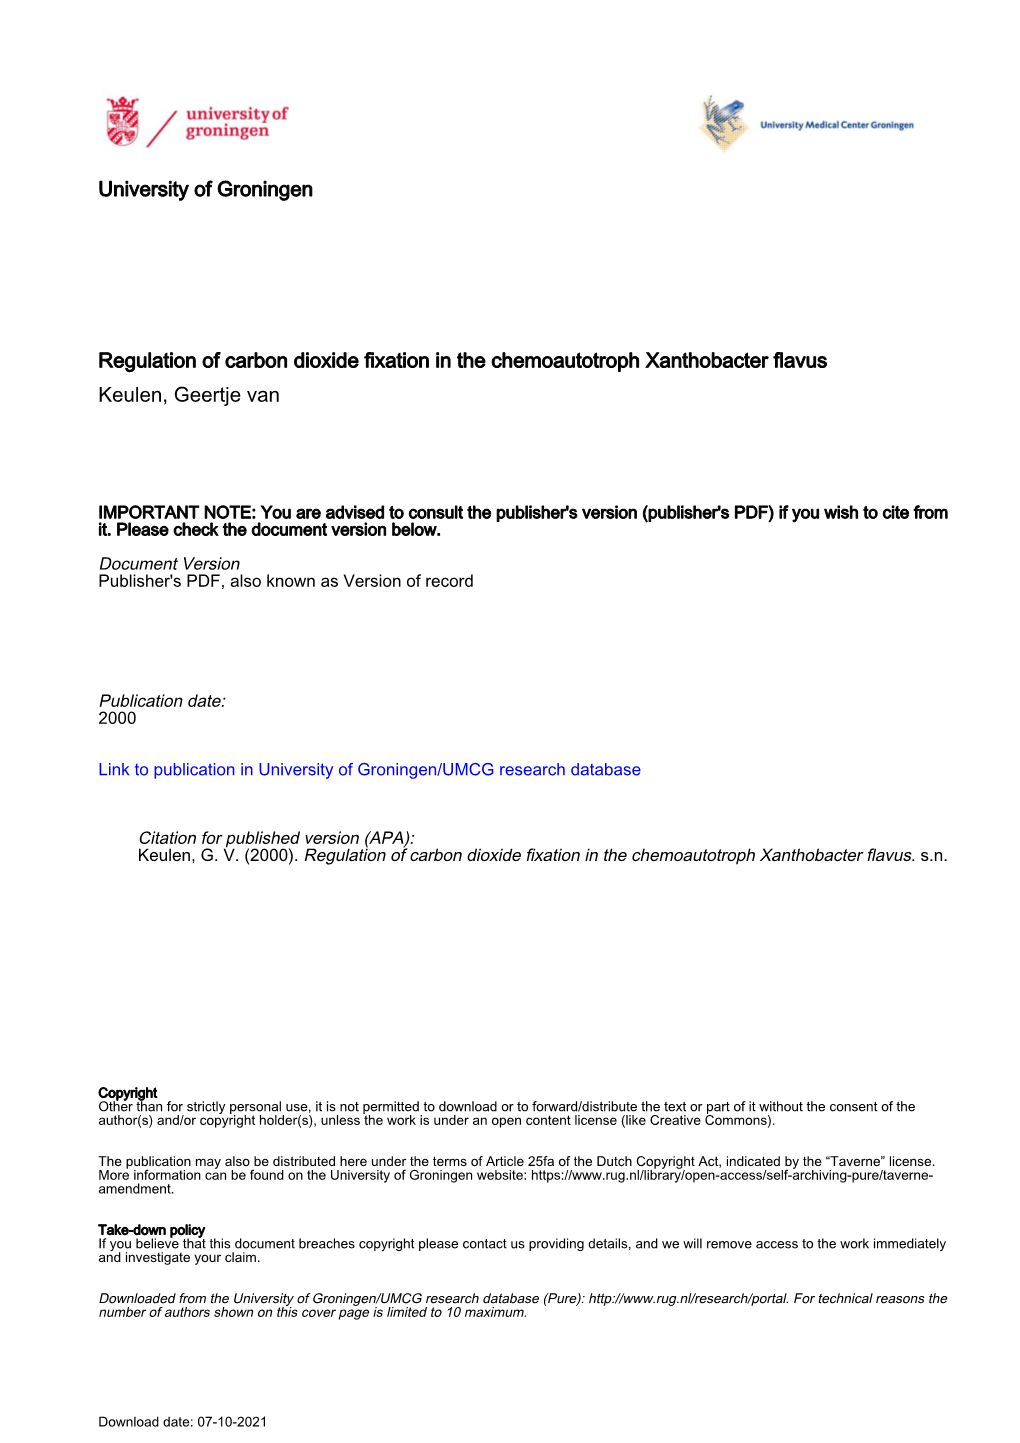 University of Groningen Regulation of Carbon Dioxide Fixation in The